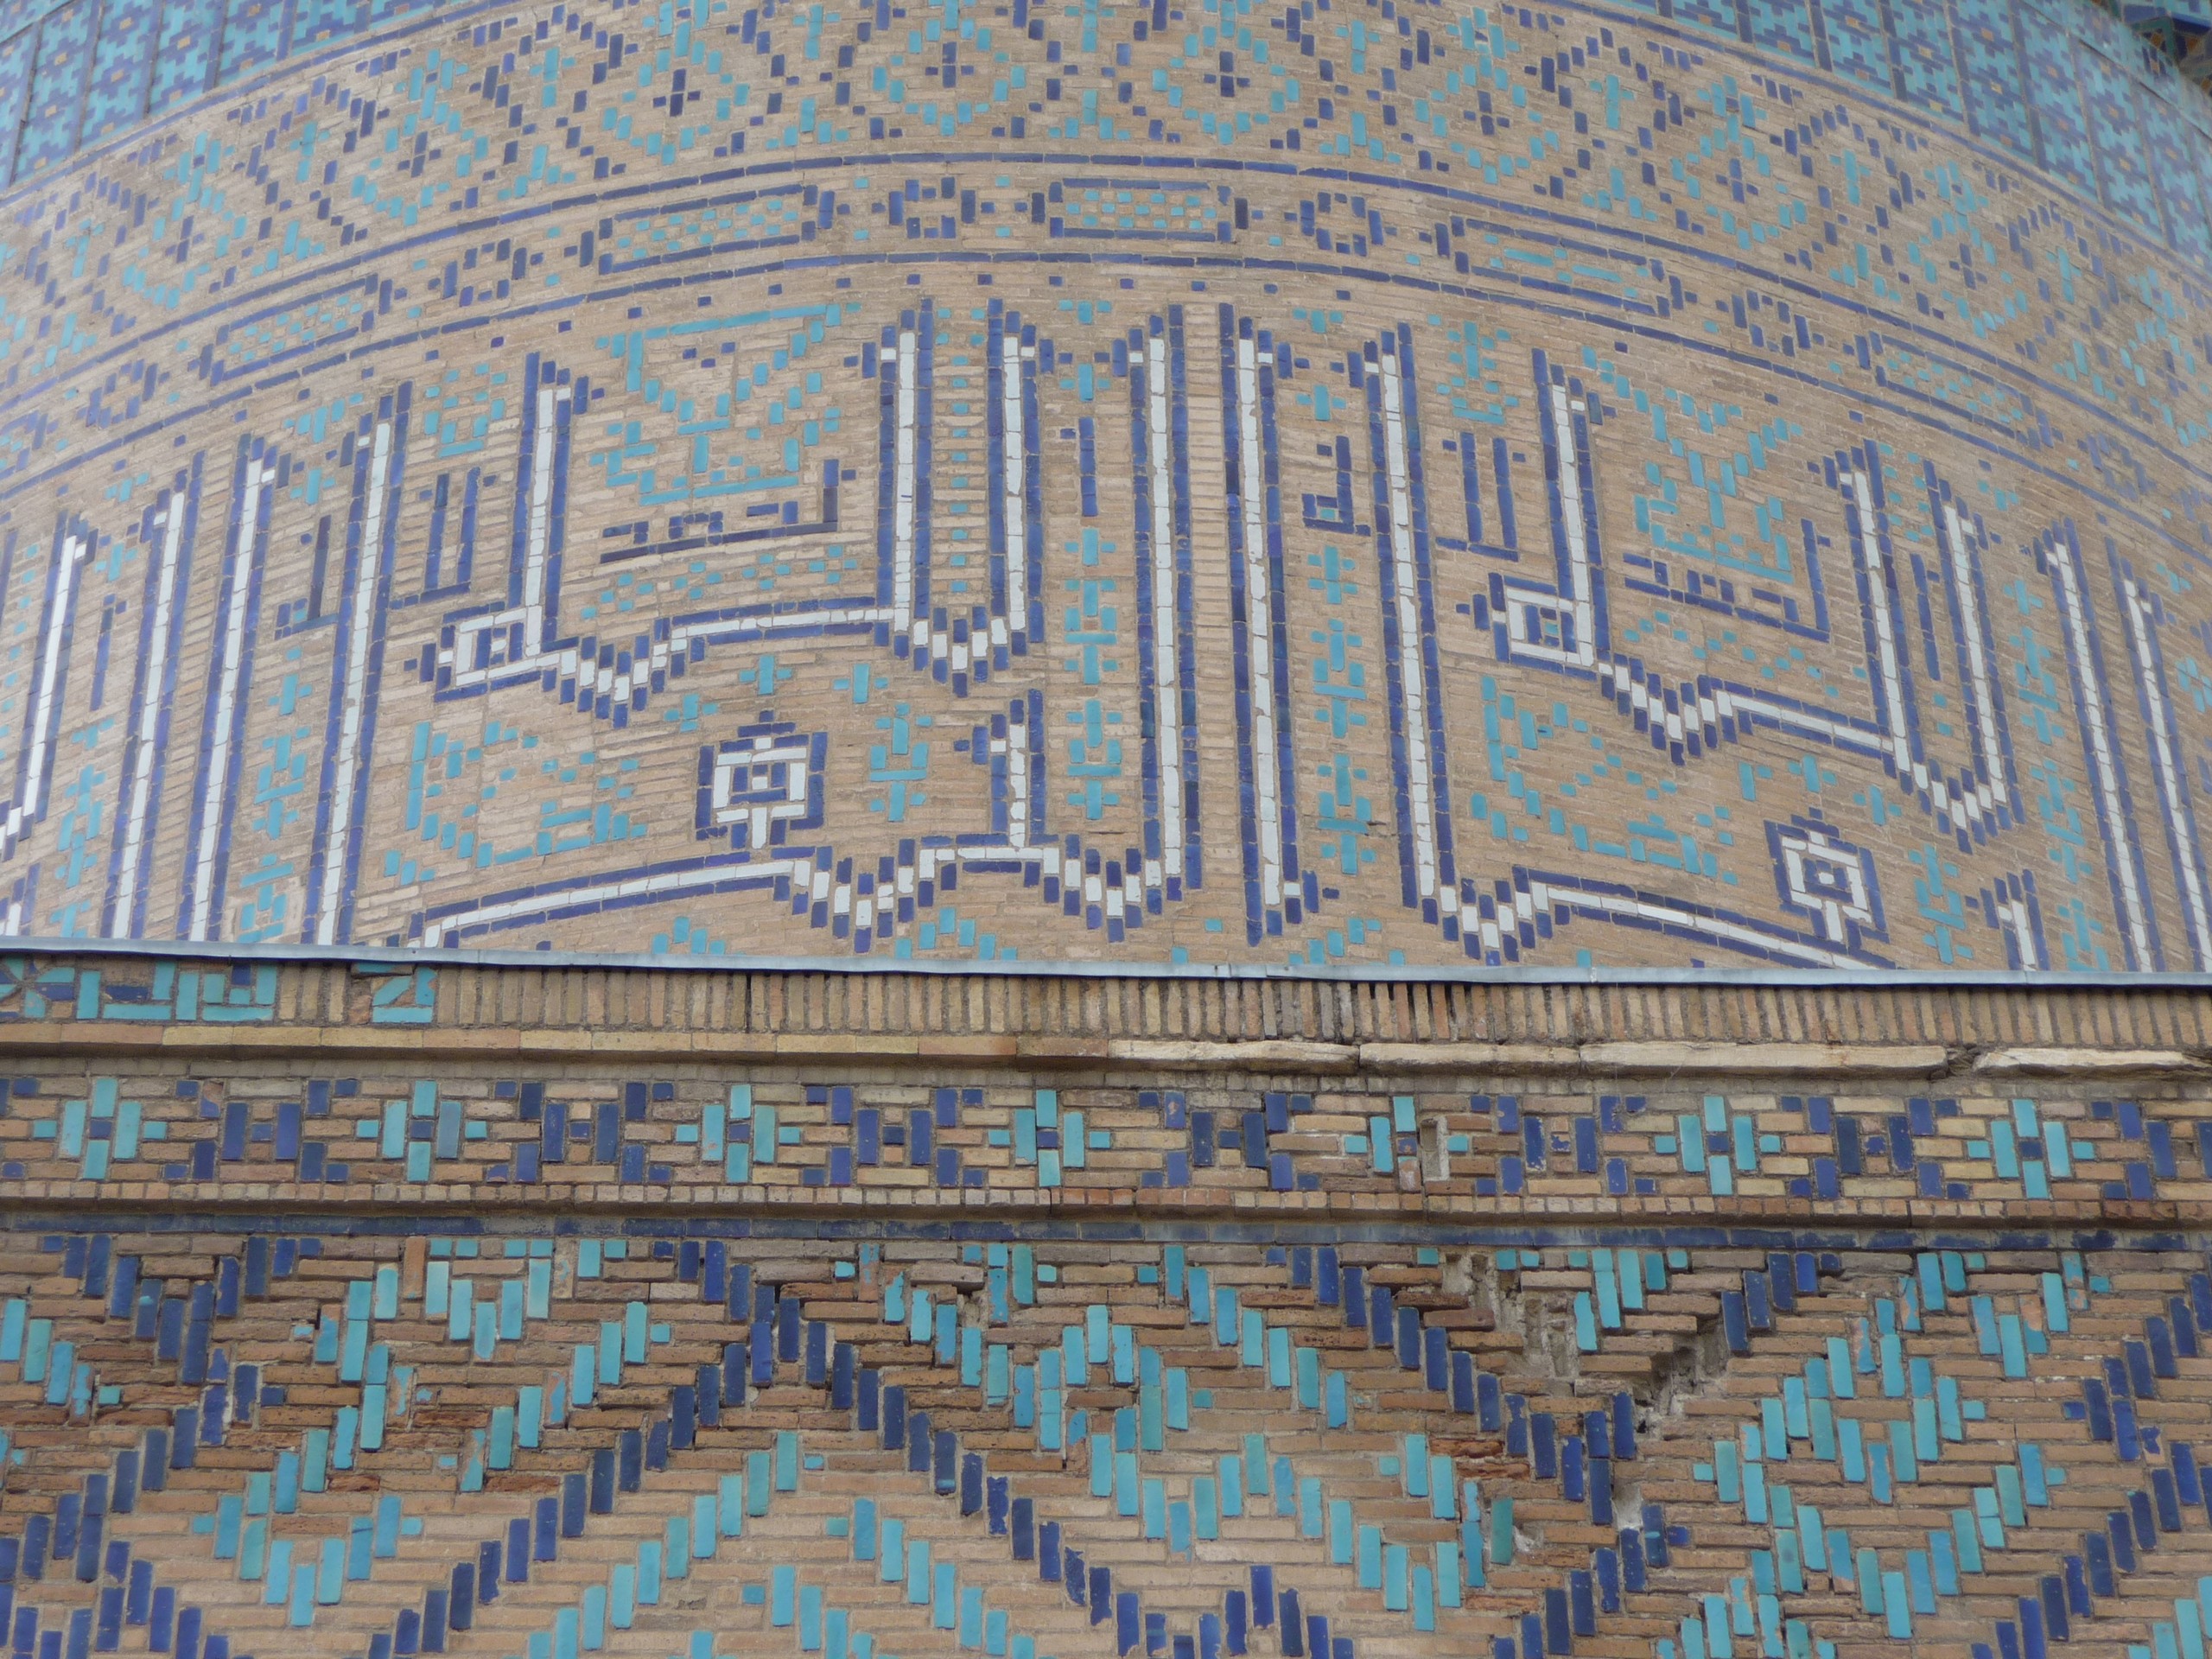 Guri Emir Mausoleum